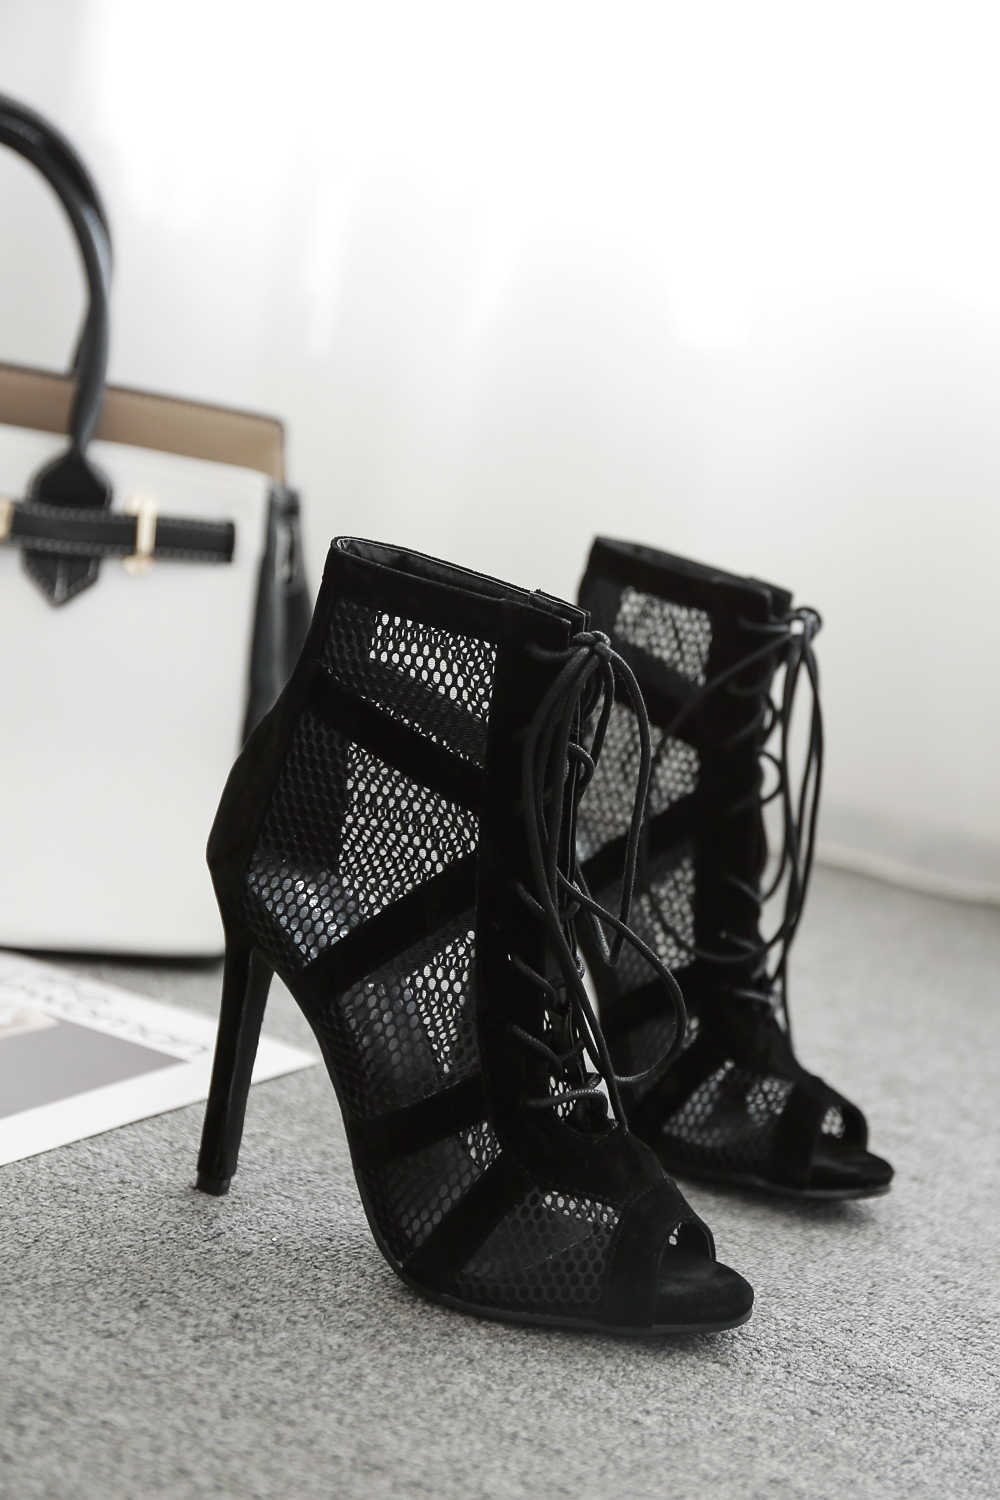 Sandaler Ny modevisning Black Net Suede Fabric Cross Strap Sexig High Heel Sandals Woman Shoes Pumpar PAEP PEEP TOE Sandaler